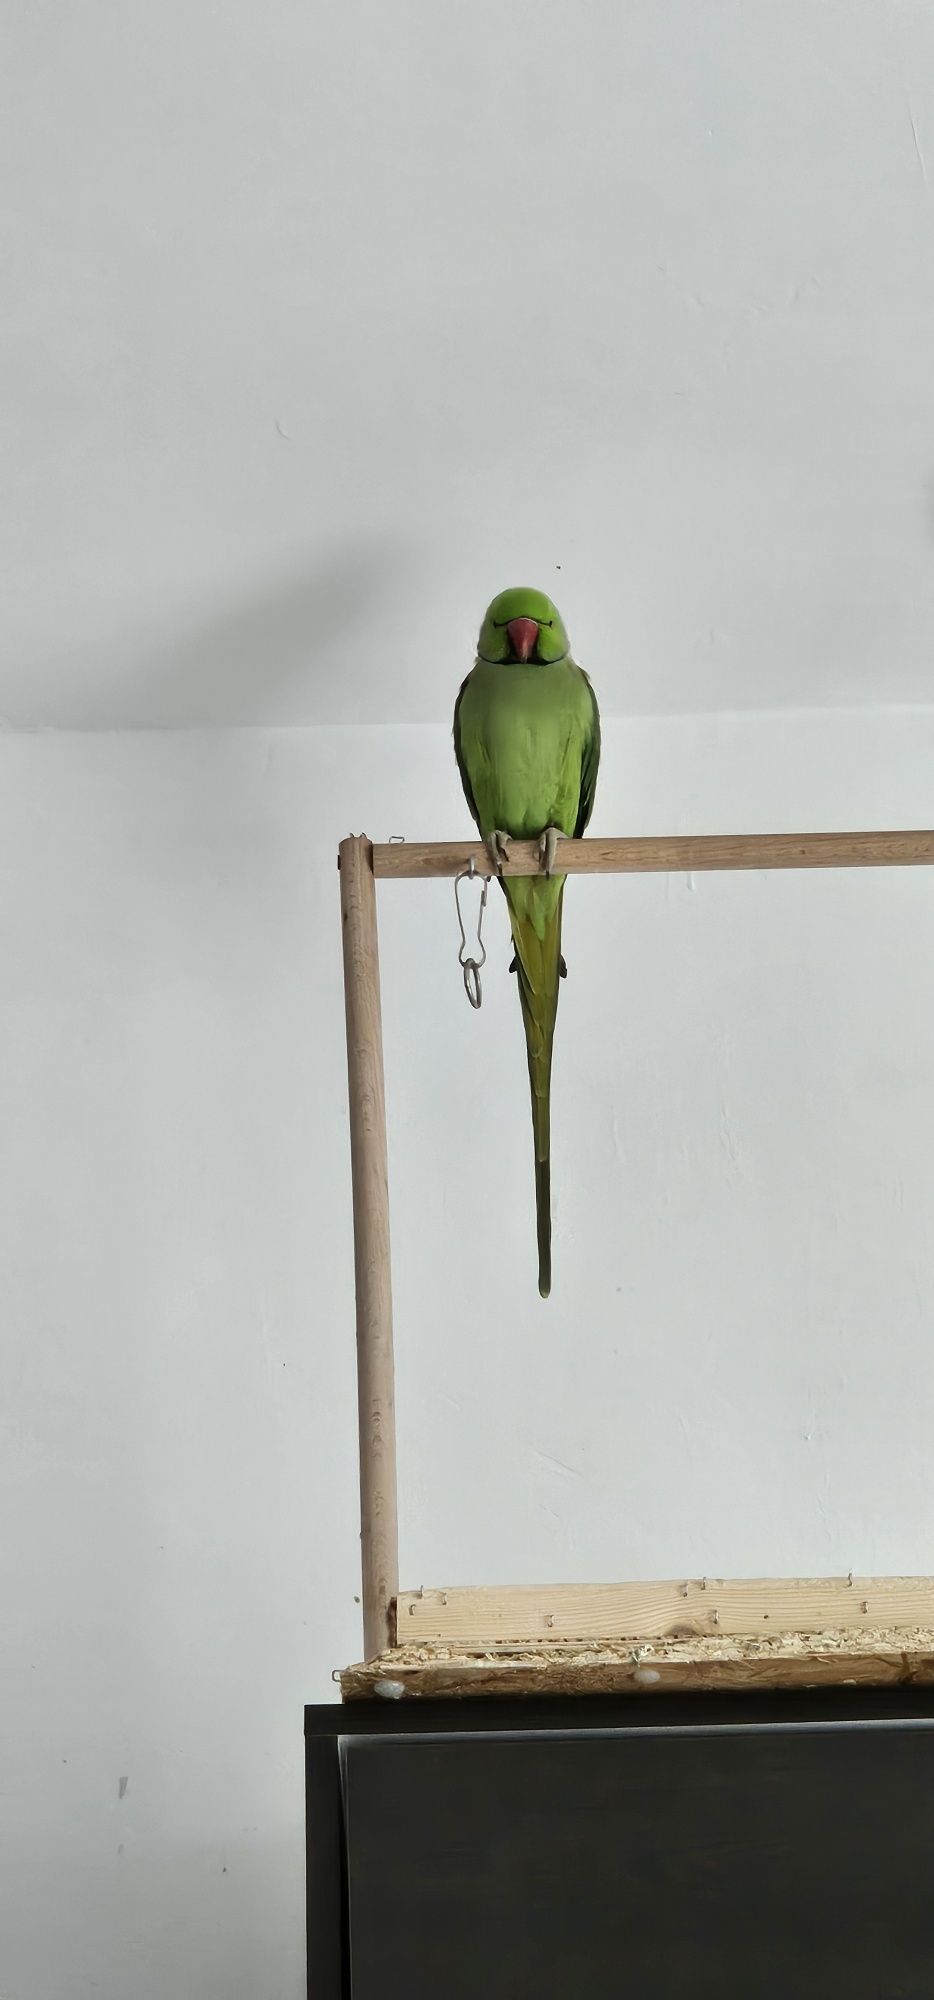 Micul alexandru- papagal 3 ani mascul